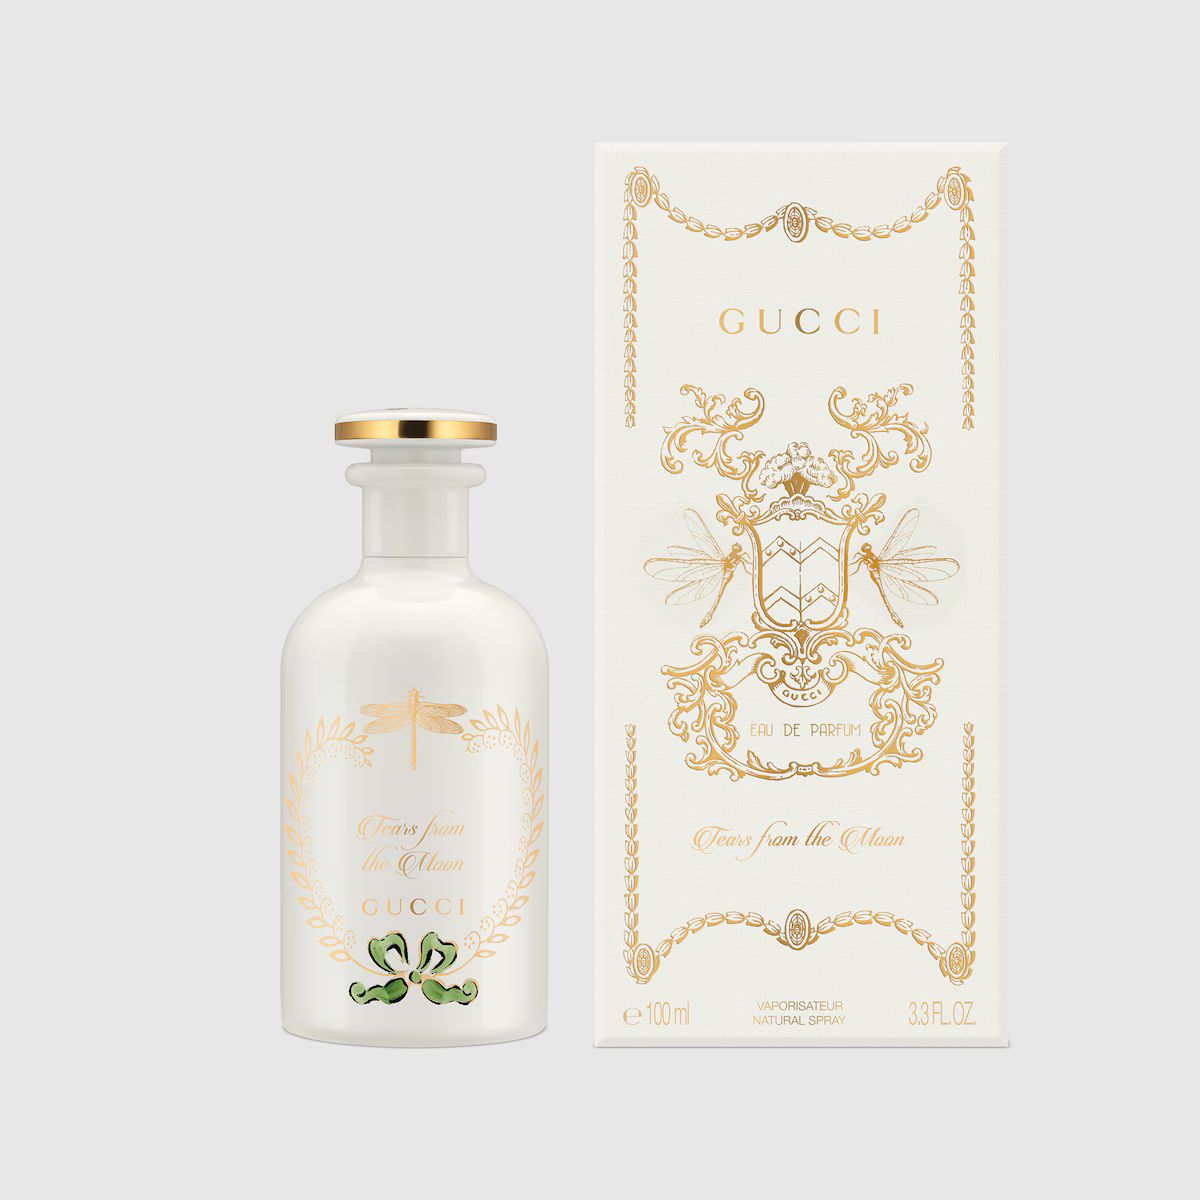 Gucci The Alchemist’s Garden Tears from the Moon, 100ml, eau de parfum | Gucci (US)